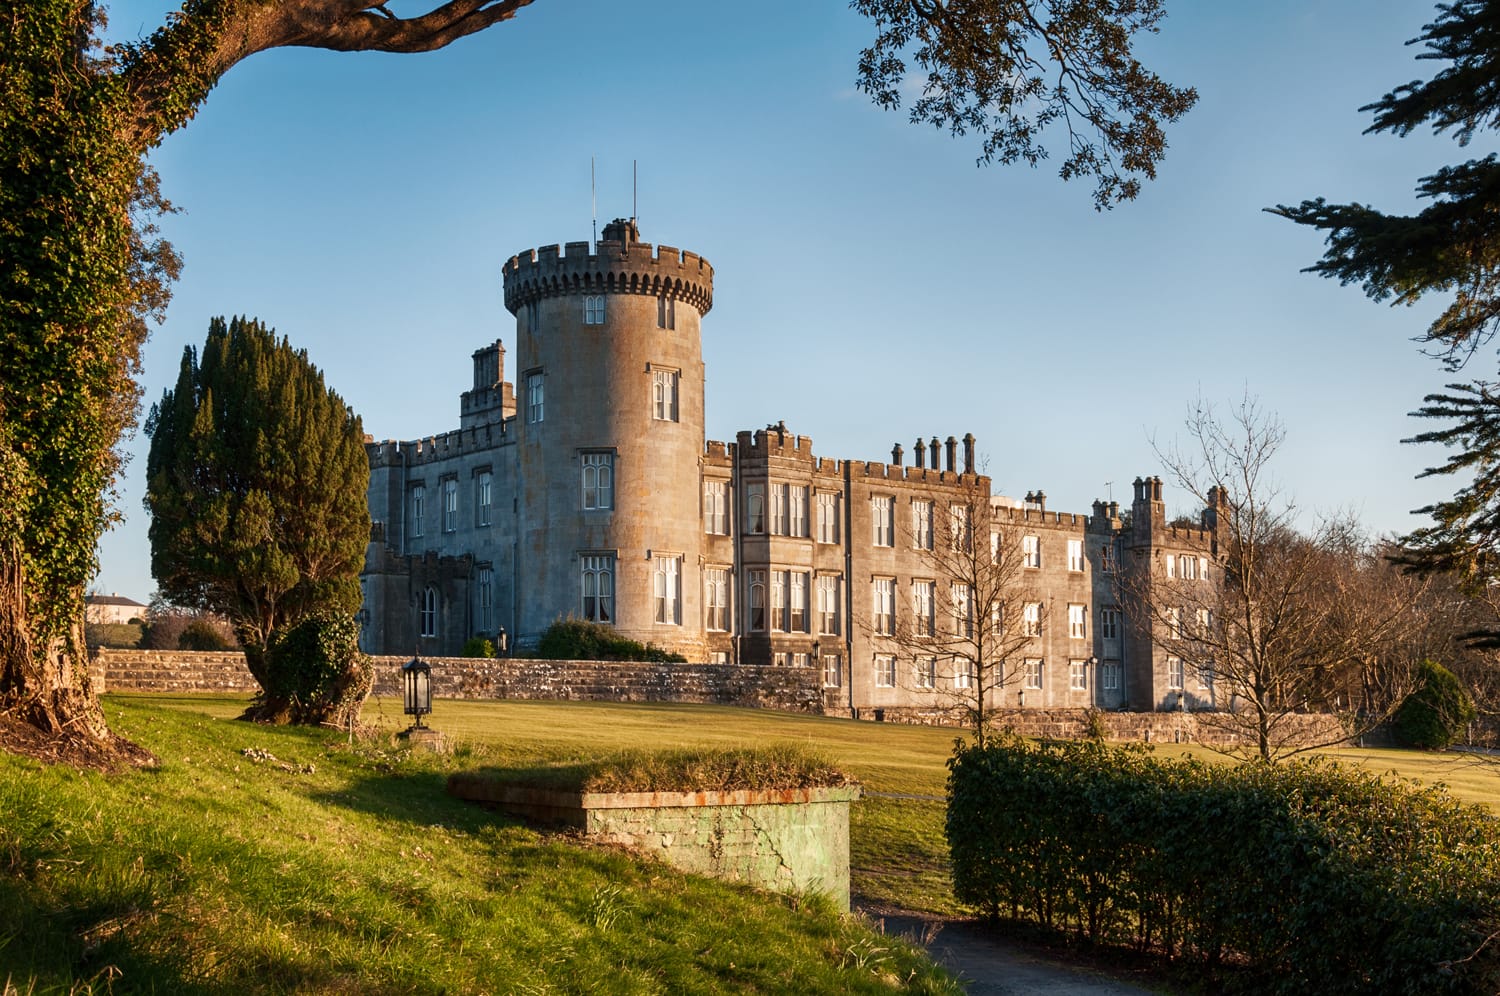 Dromoland Castle in Ireland